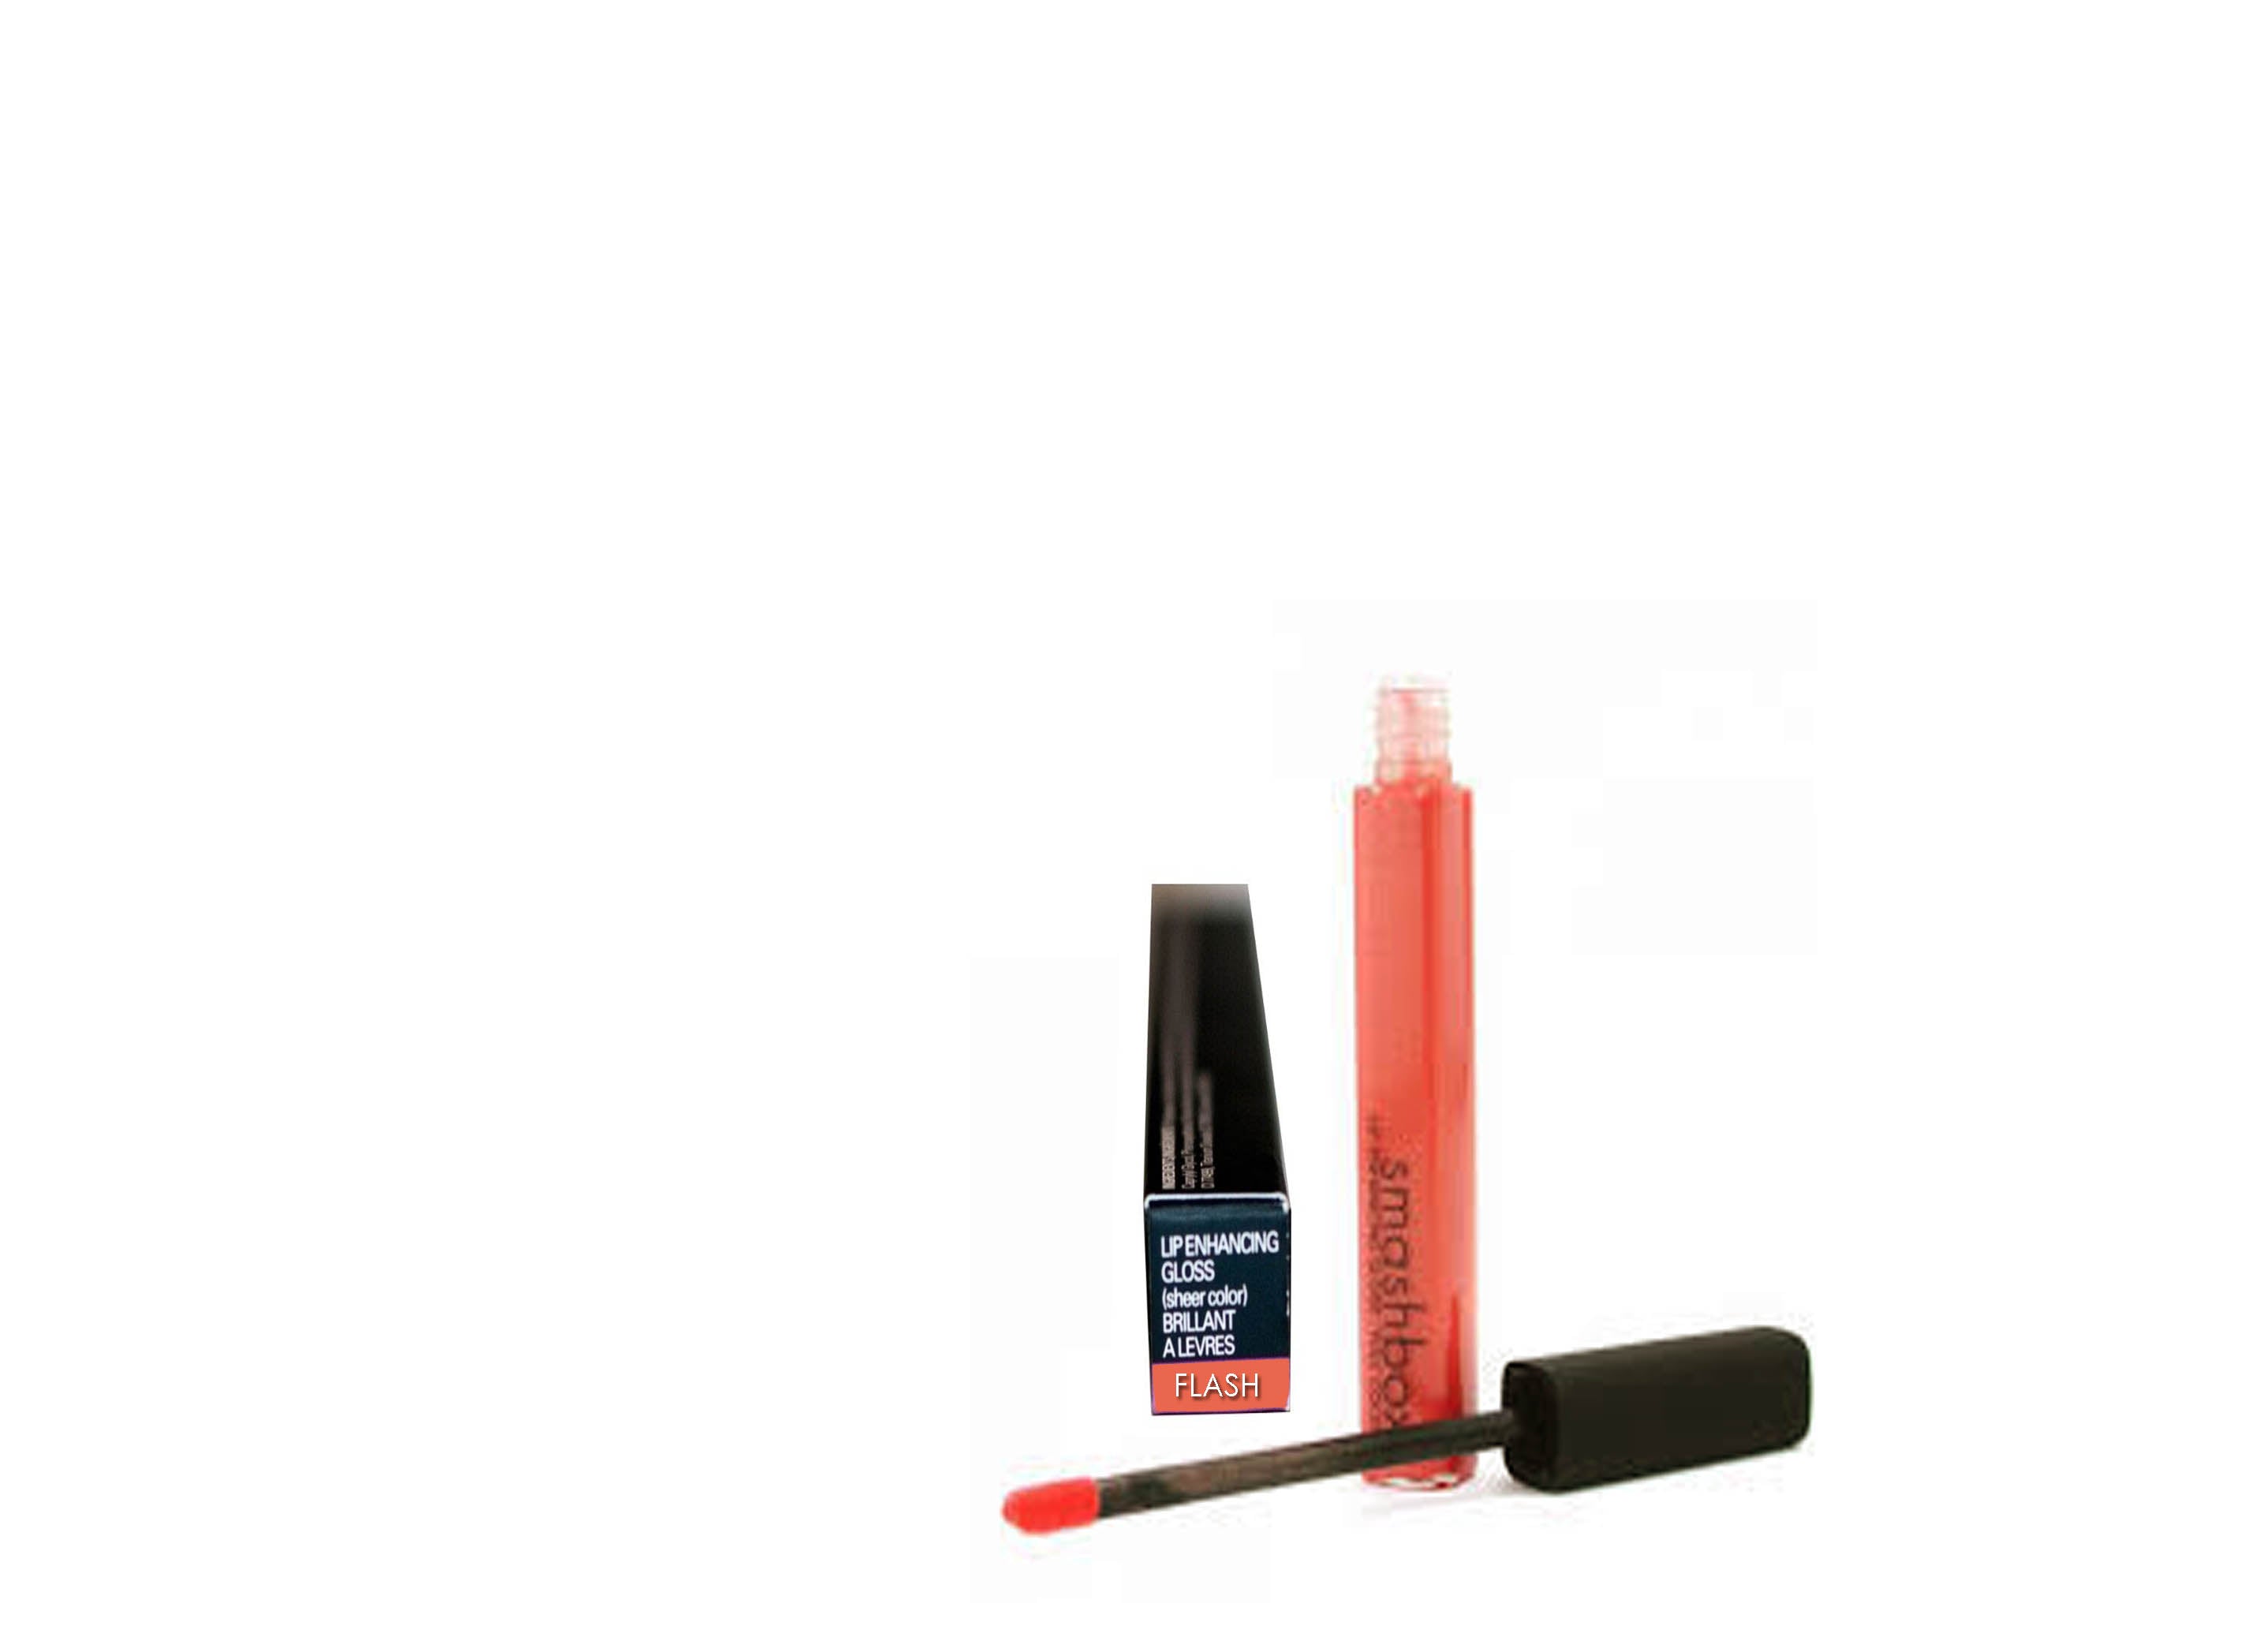 Smashbox Lip Enhancing Gloss - Flash